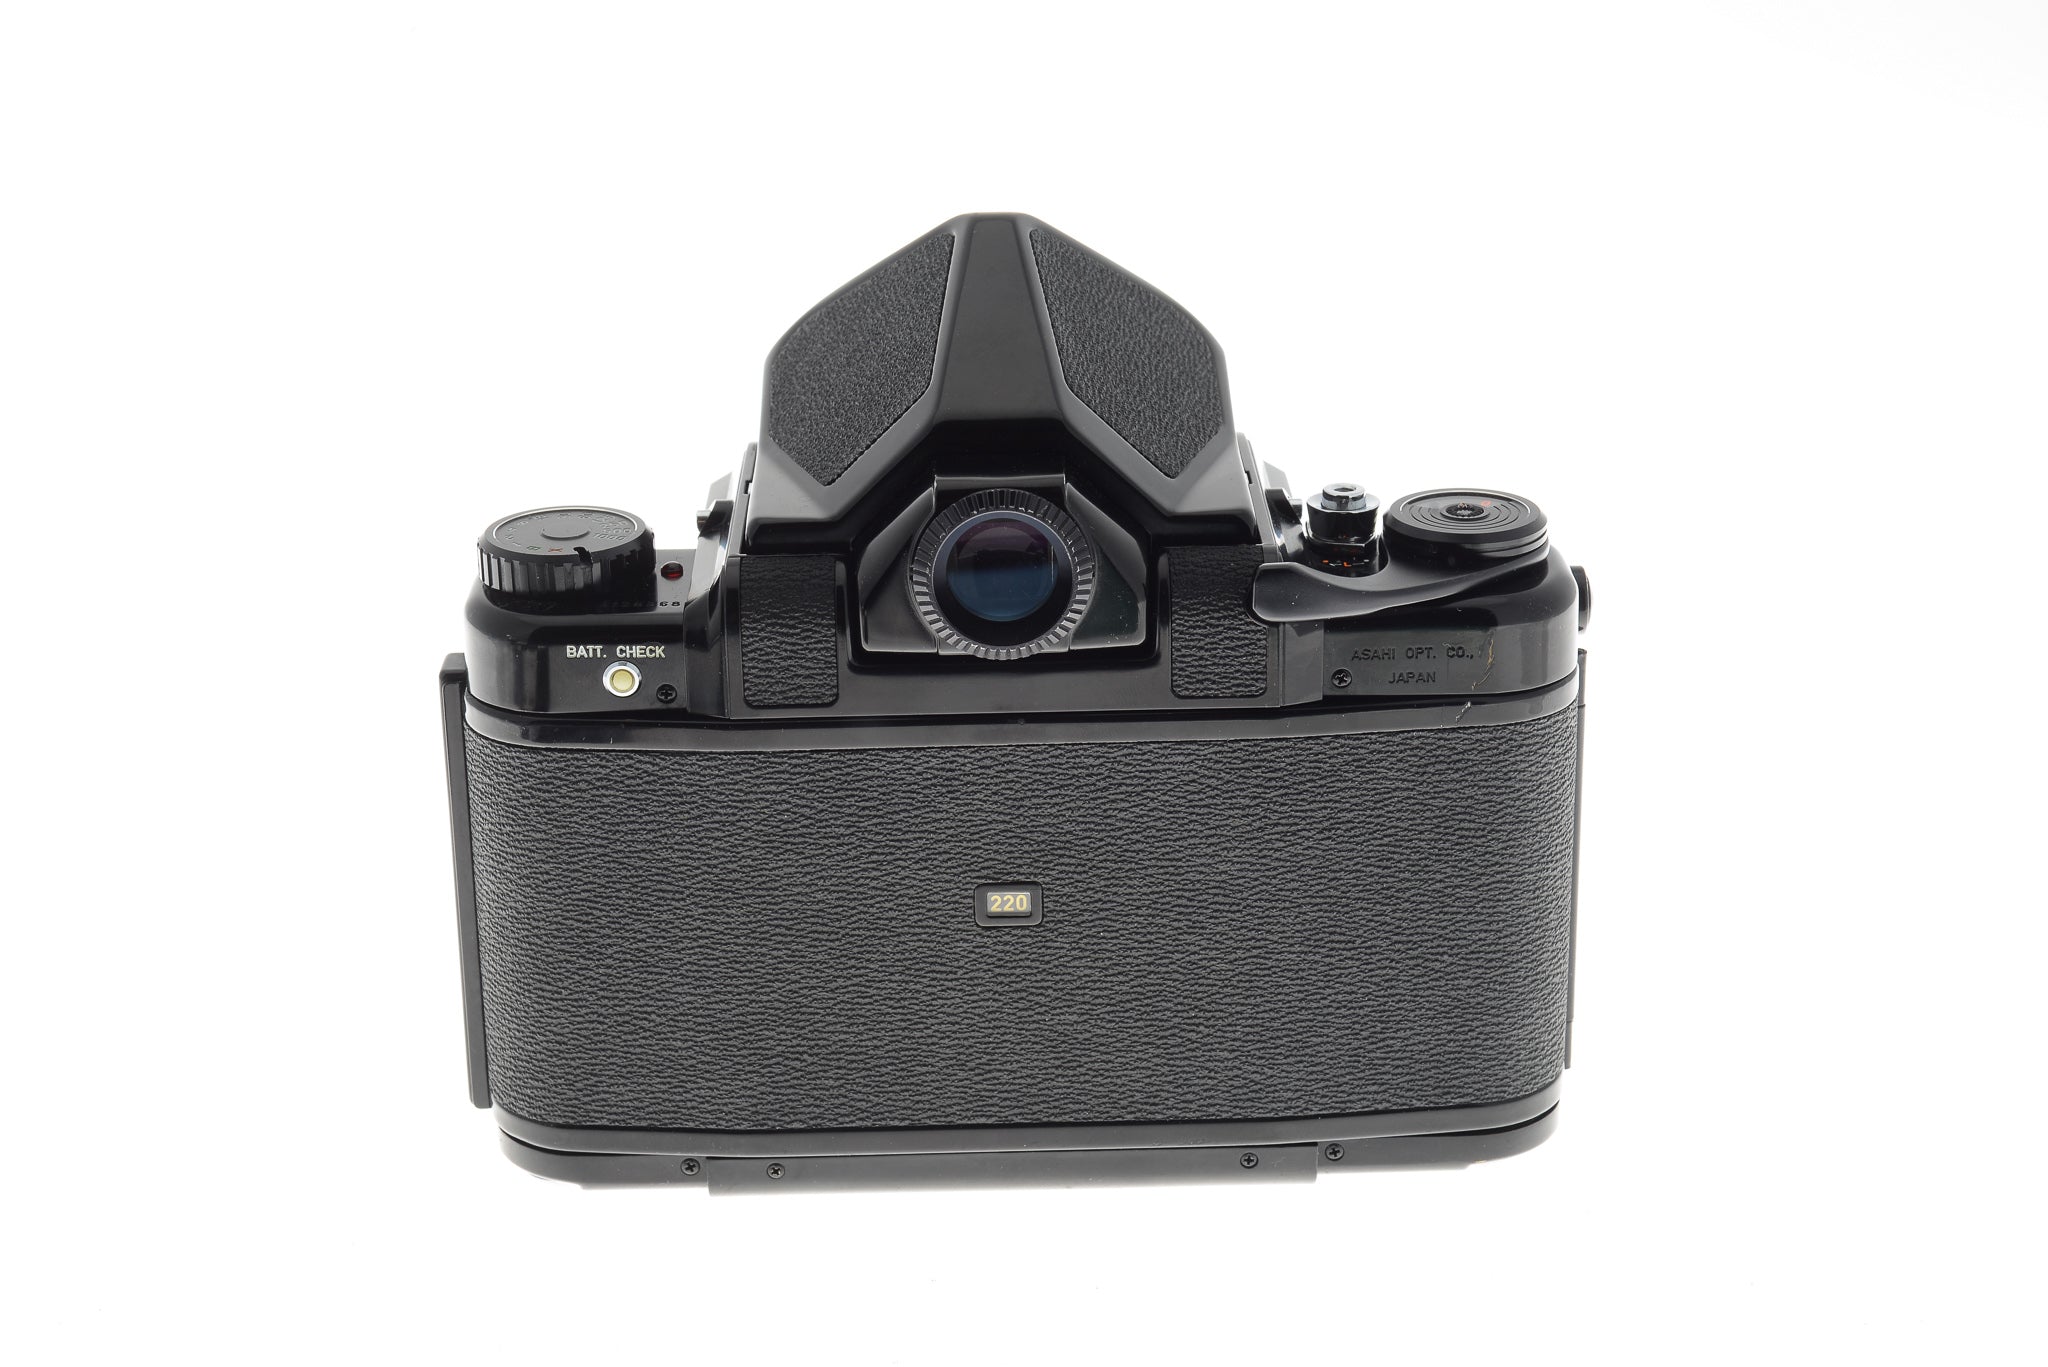 Pentax 6x7 - Camera – Kamerastore